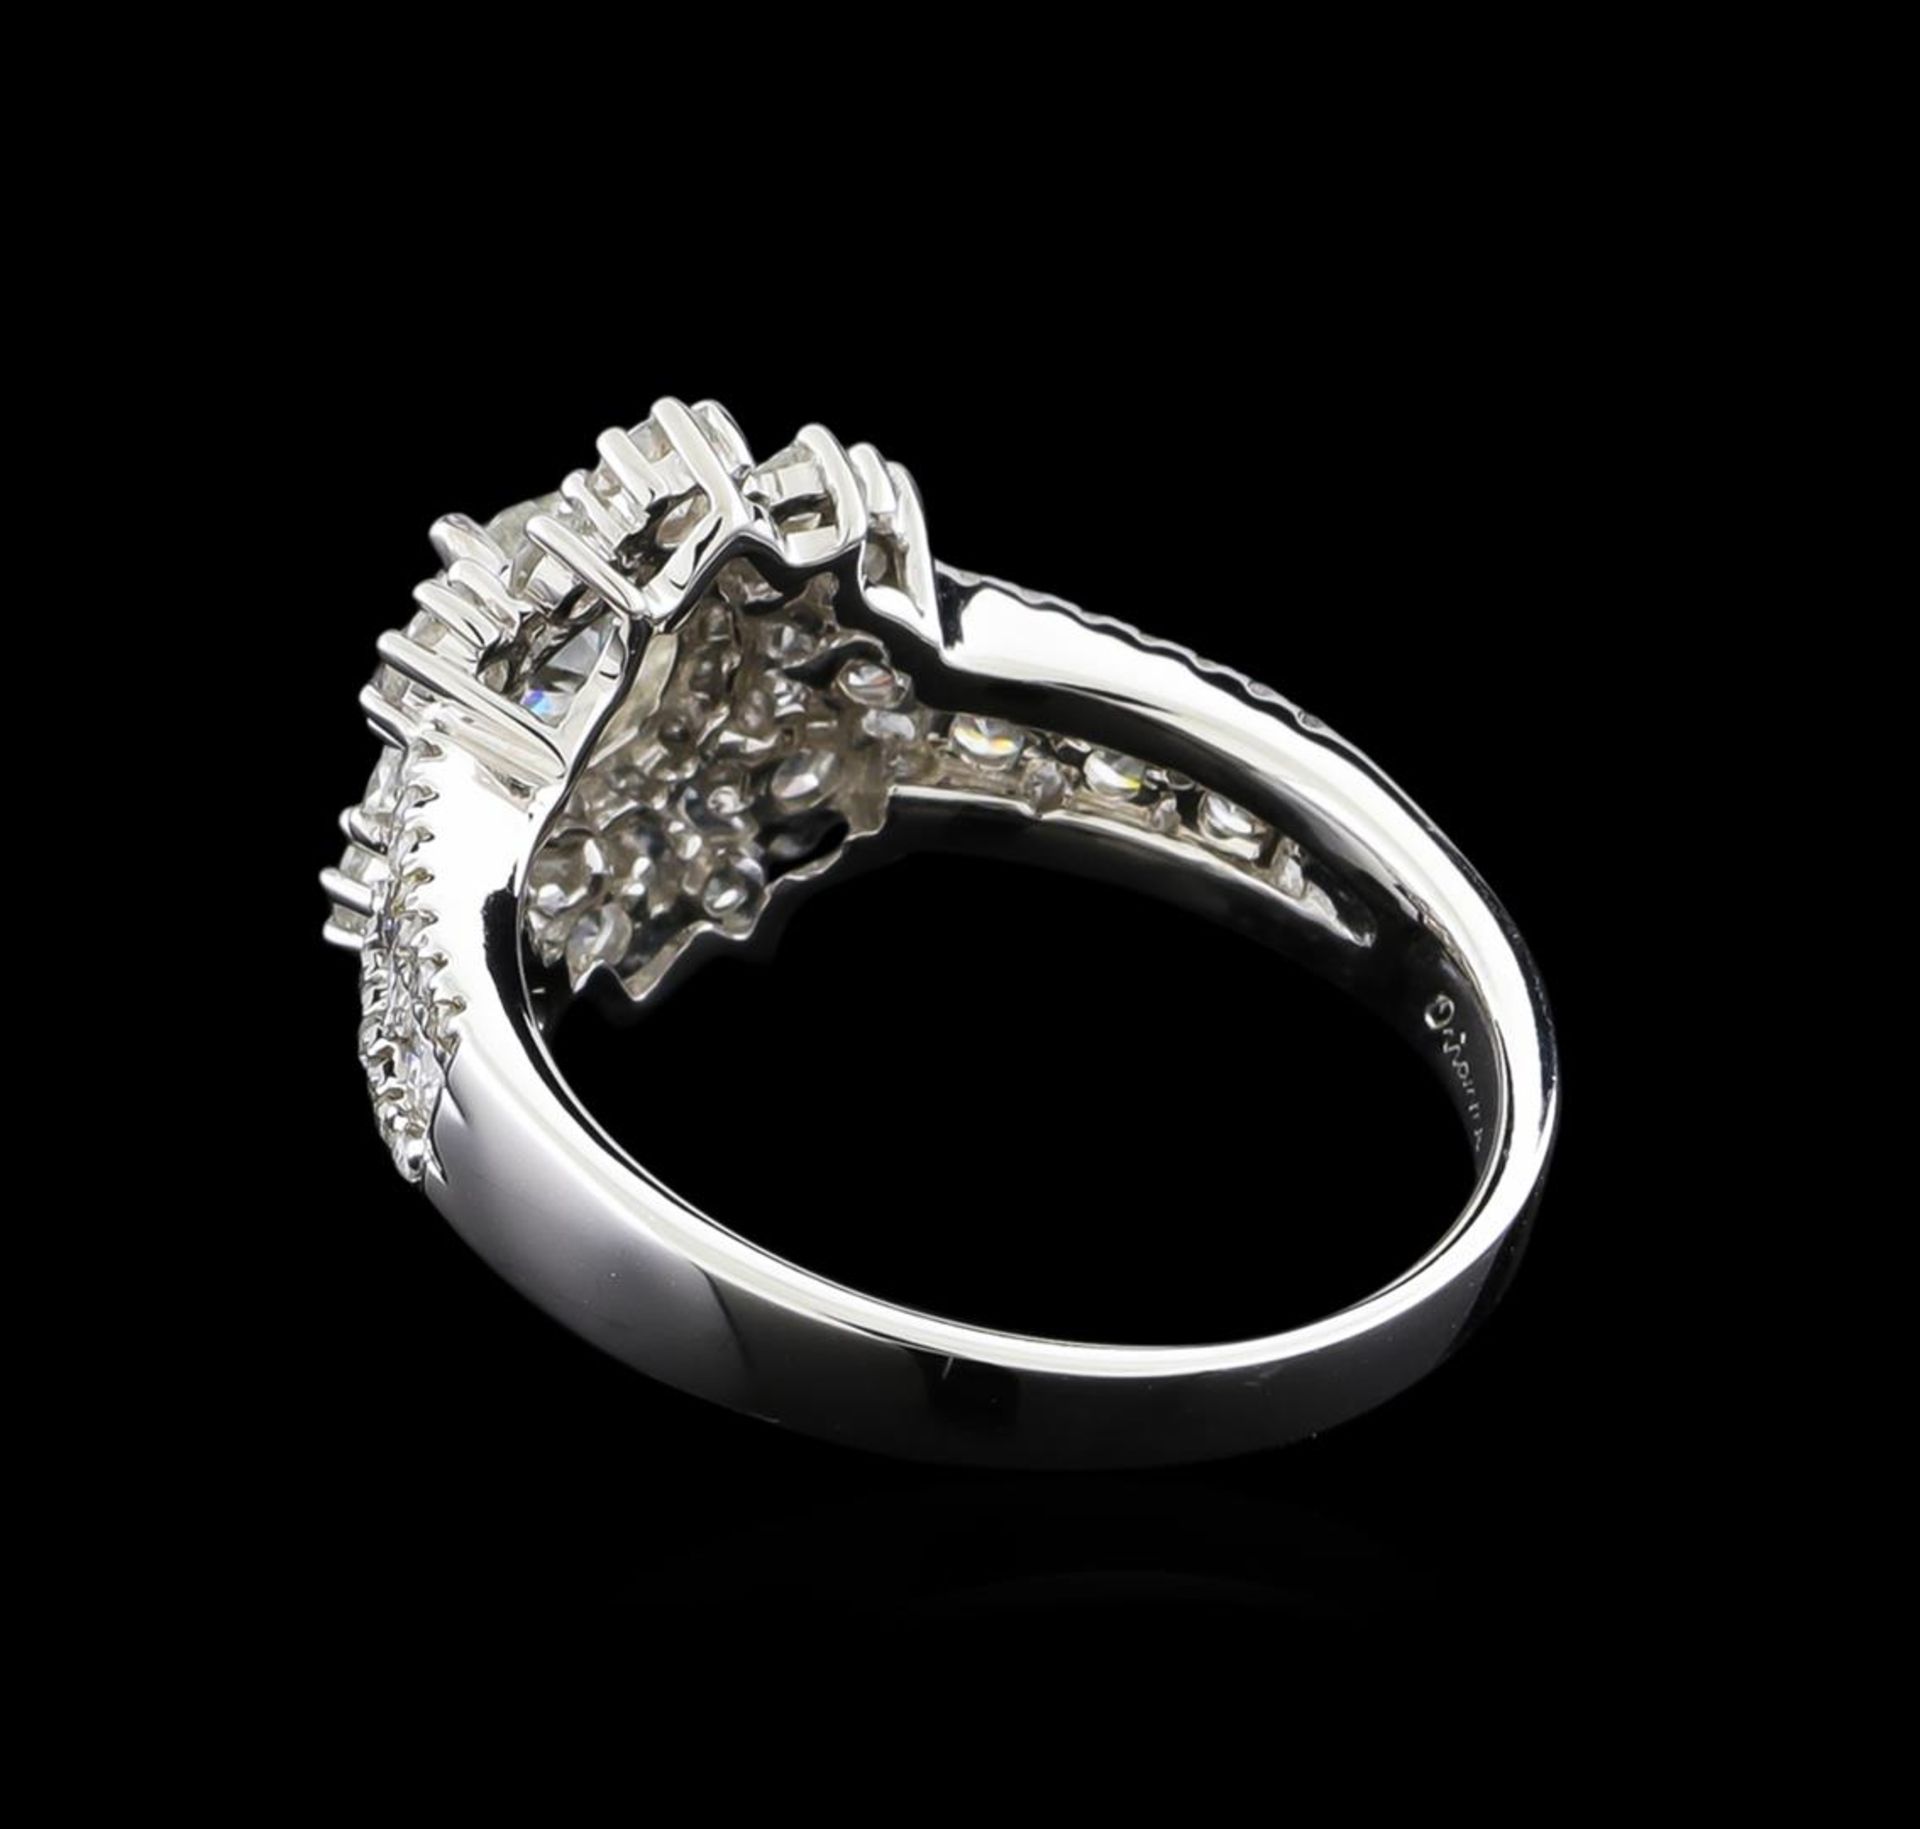 14KT White Gold 1.89 ctw Diamond Ring - Image 3 of 5